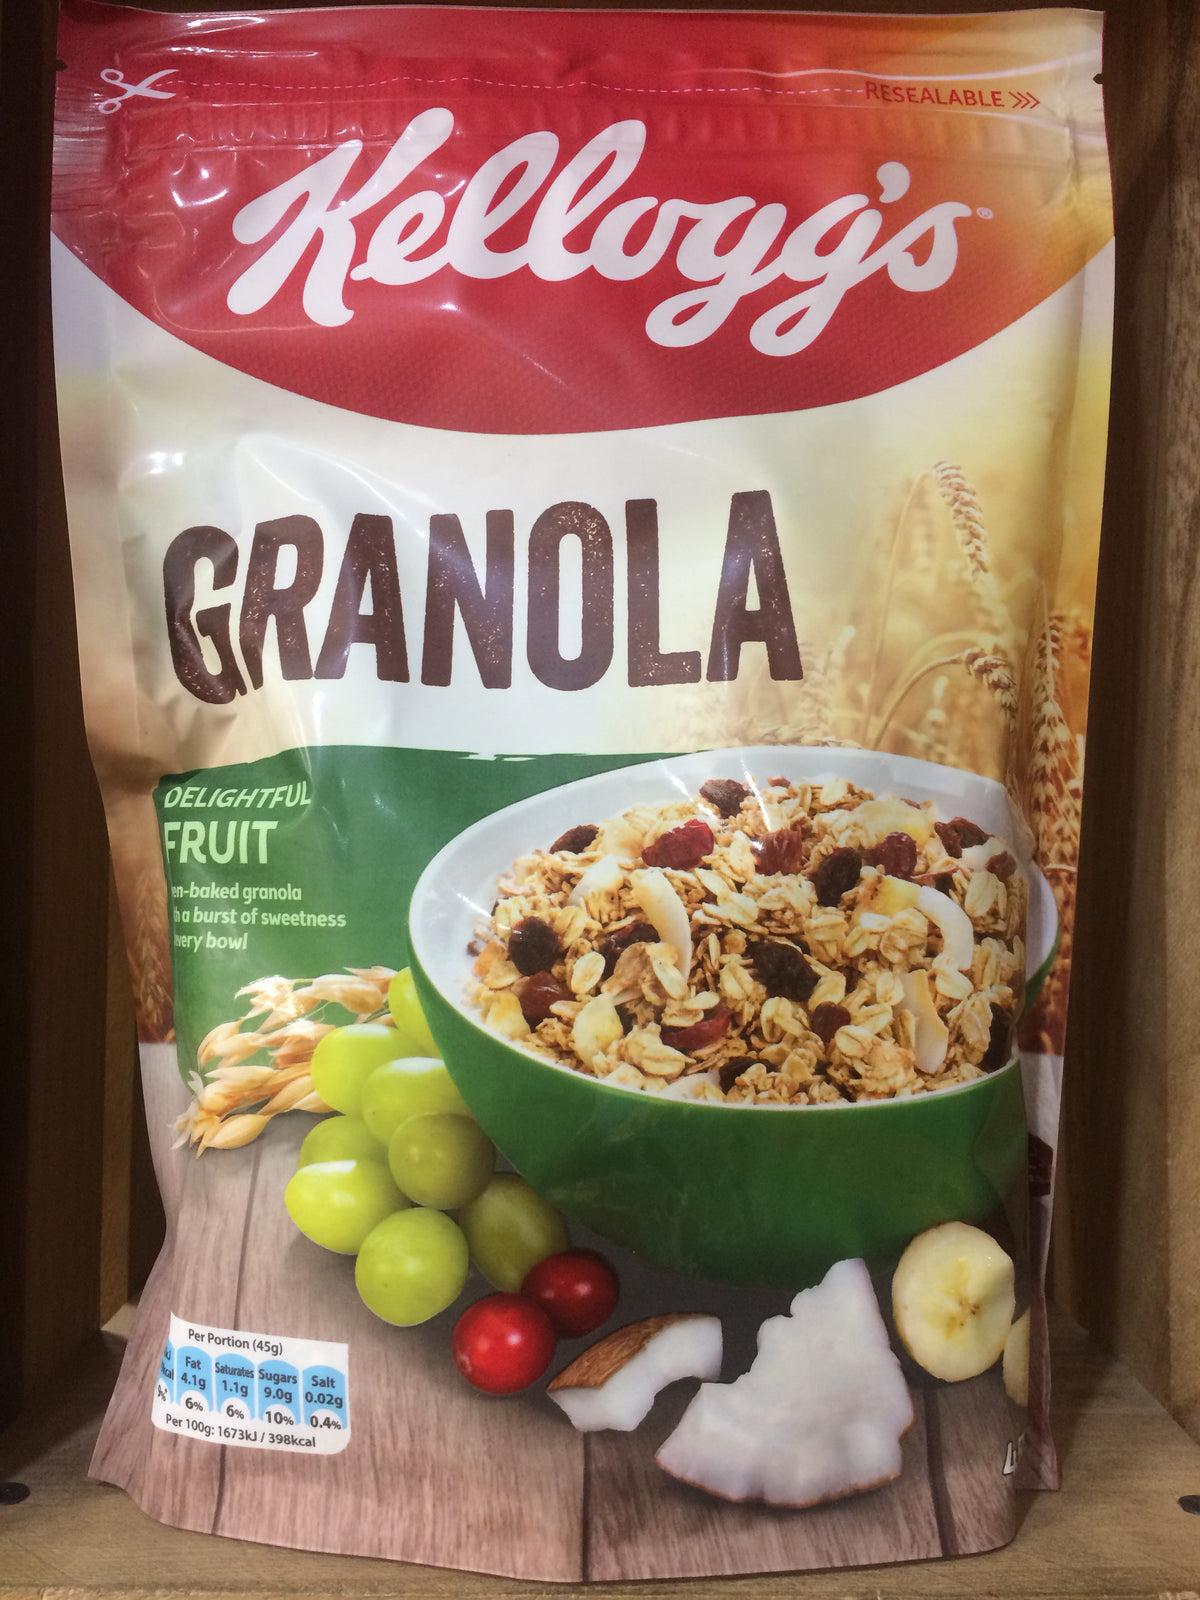 Cereal Corn Flakes Kelloggs original 450 g